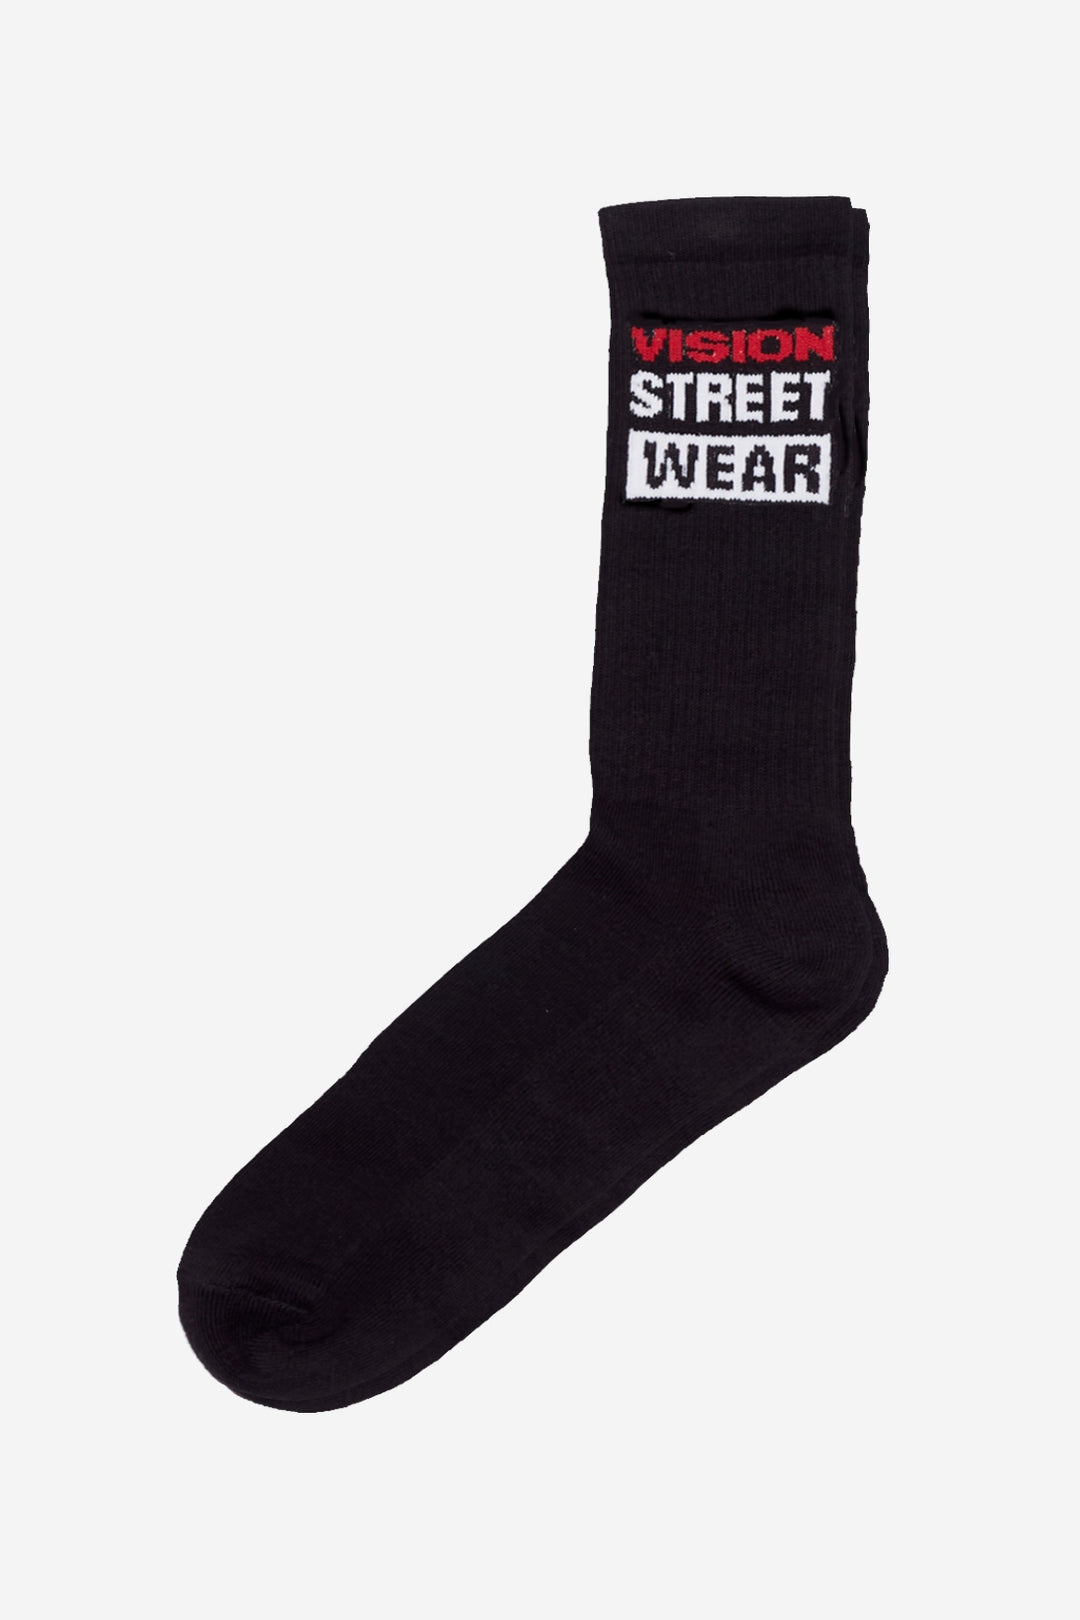 Vision Street Wear Skateboard Sports Socks Black